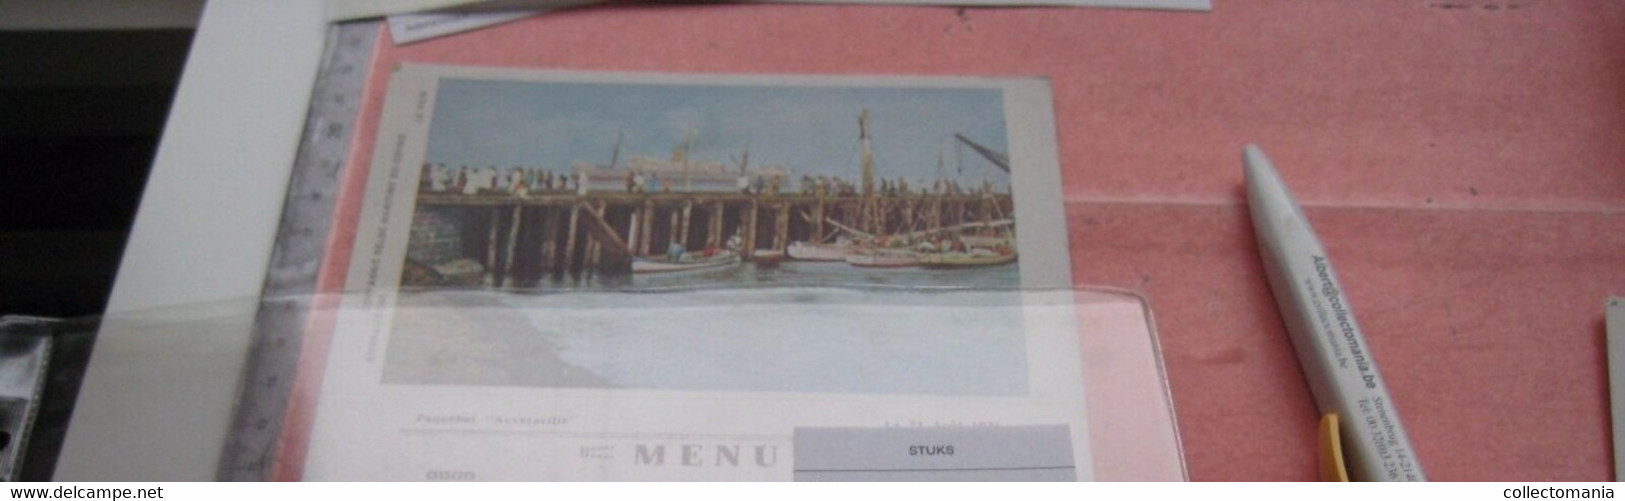 Authentic Menu Card, 1921 Congo Boat ANVERSVILLE, 20cmX13,8cm, MATADI Cows VG -  5 March 1921   DEJEUNER = Breakfast - Menú